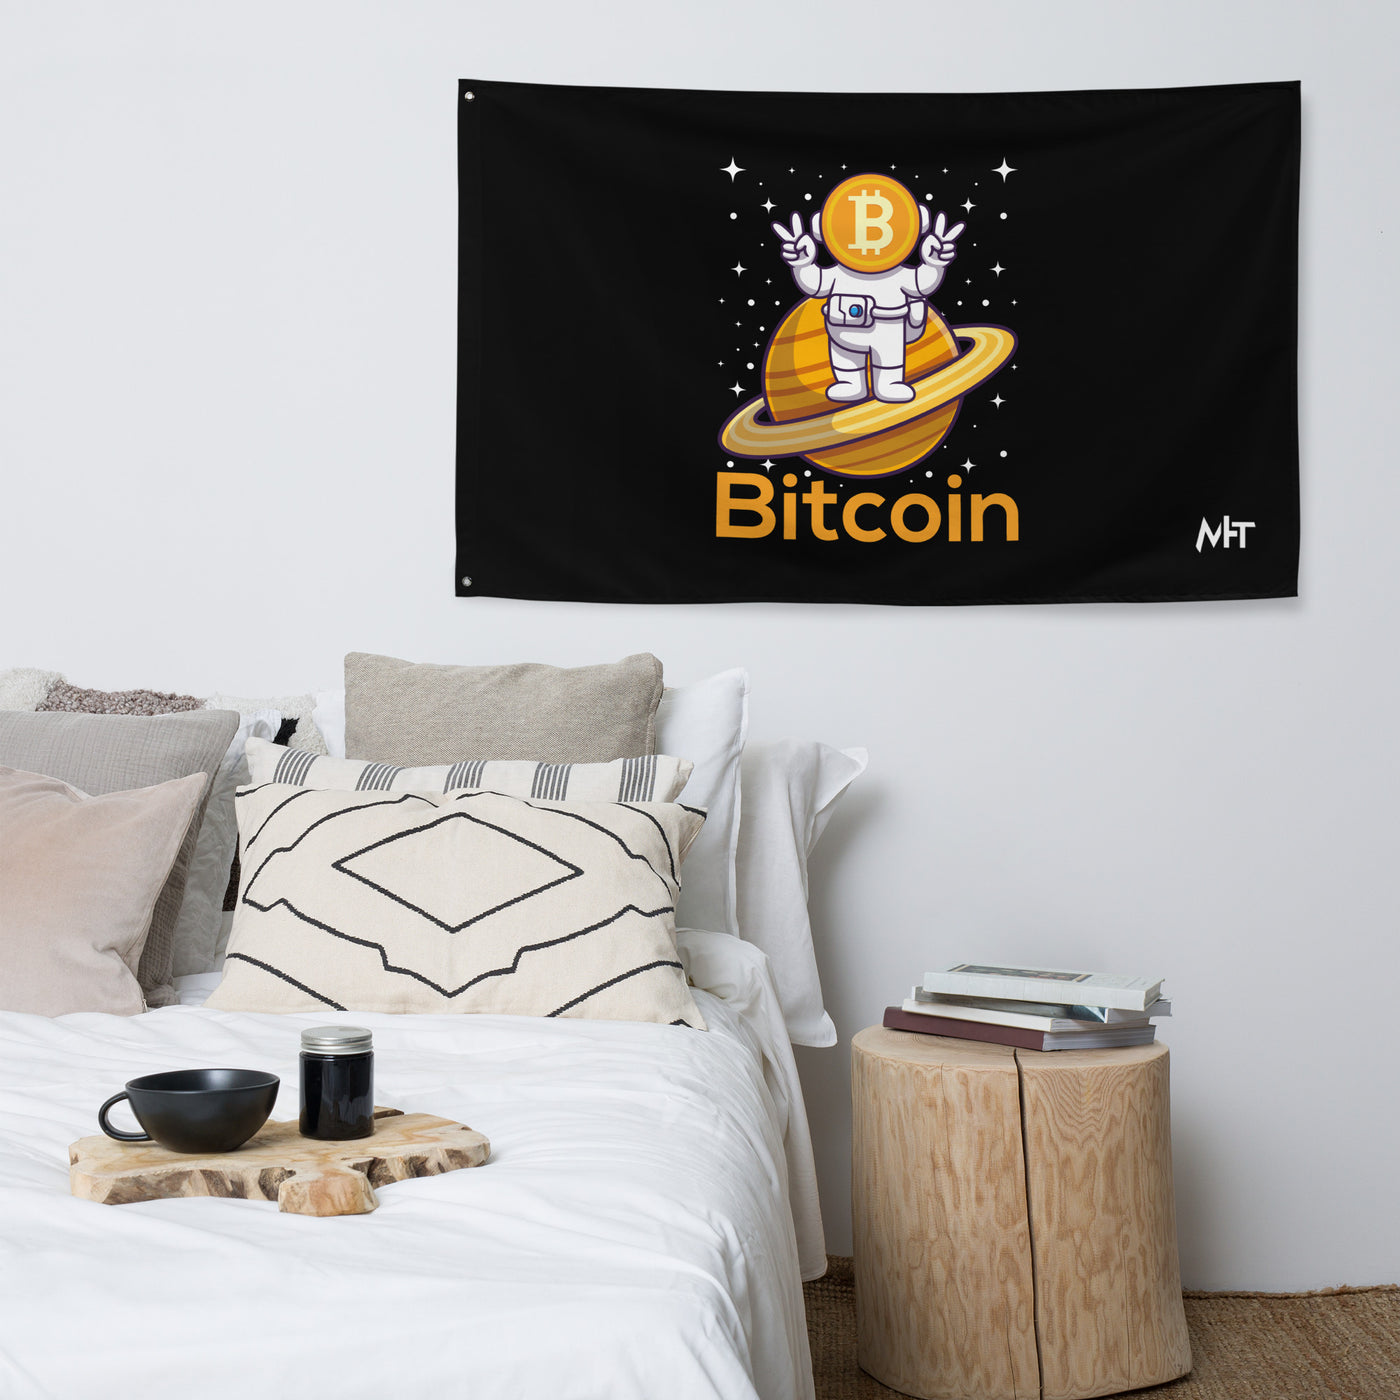 Bitcoin Satan Astronaut - Flag